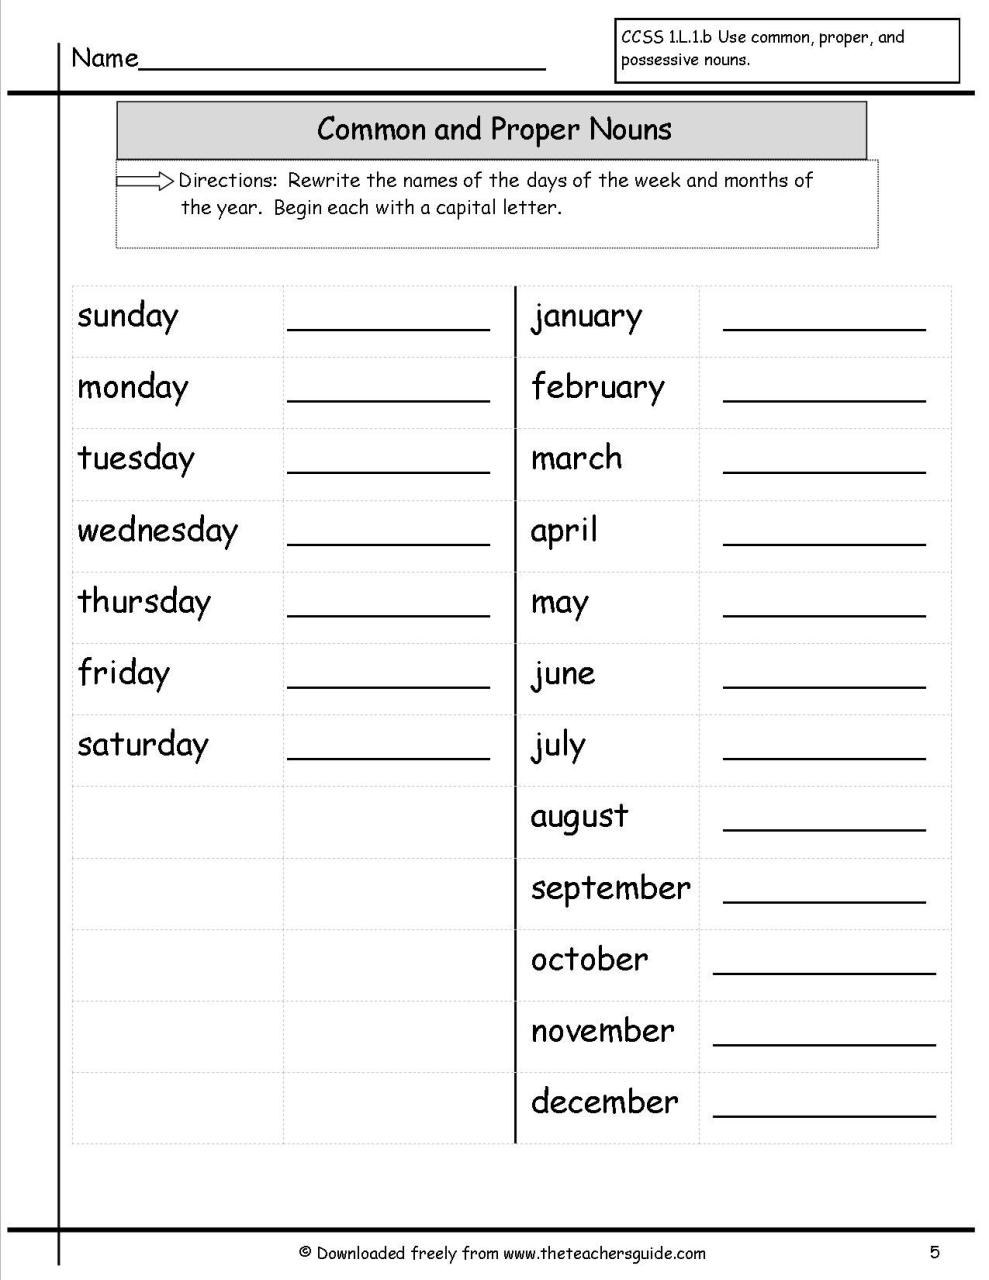 4th Grade Common And Proper Nouns Worksheet Grade 4